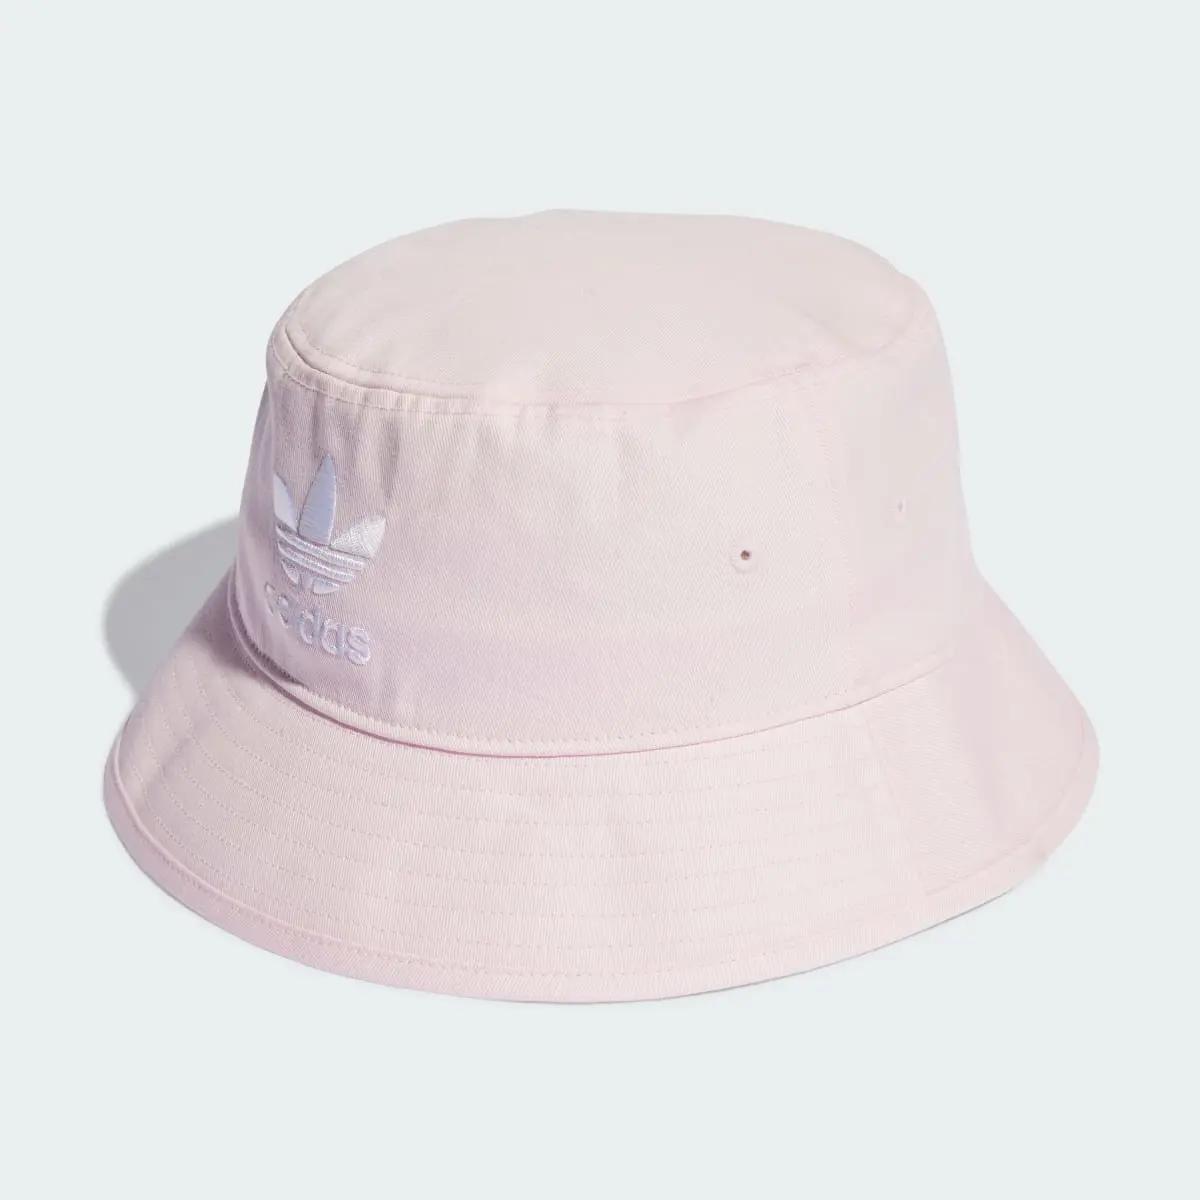 Adidas Trefoil Bucket Hat. 2